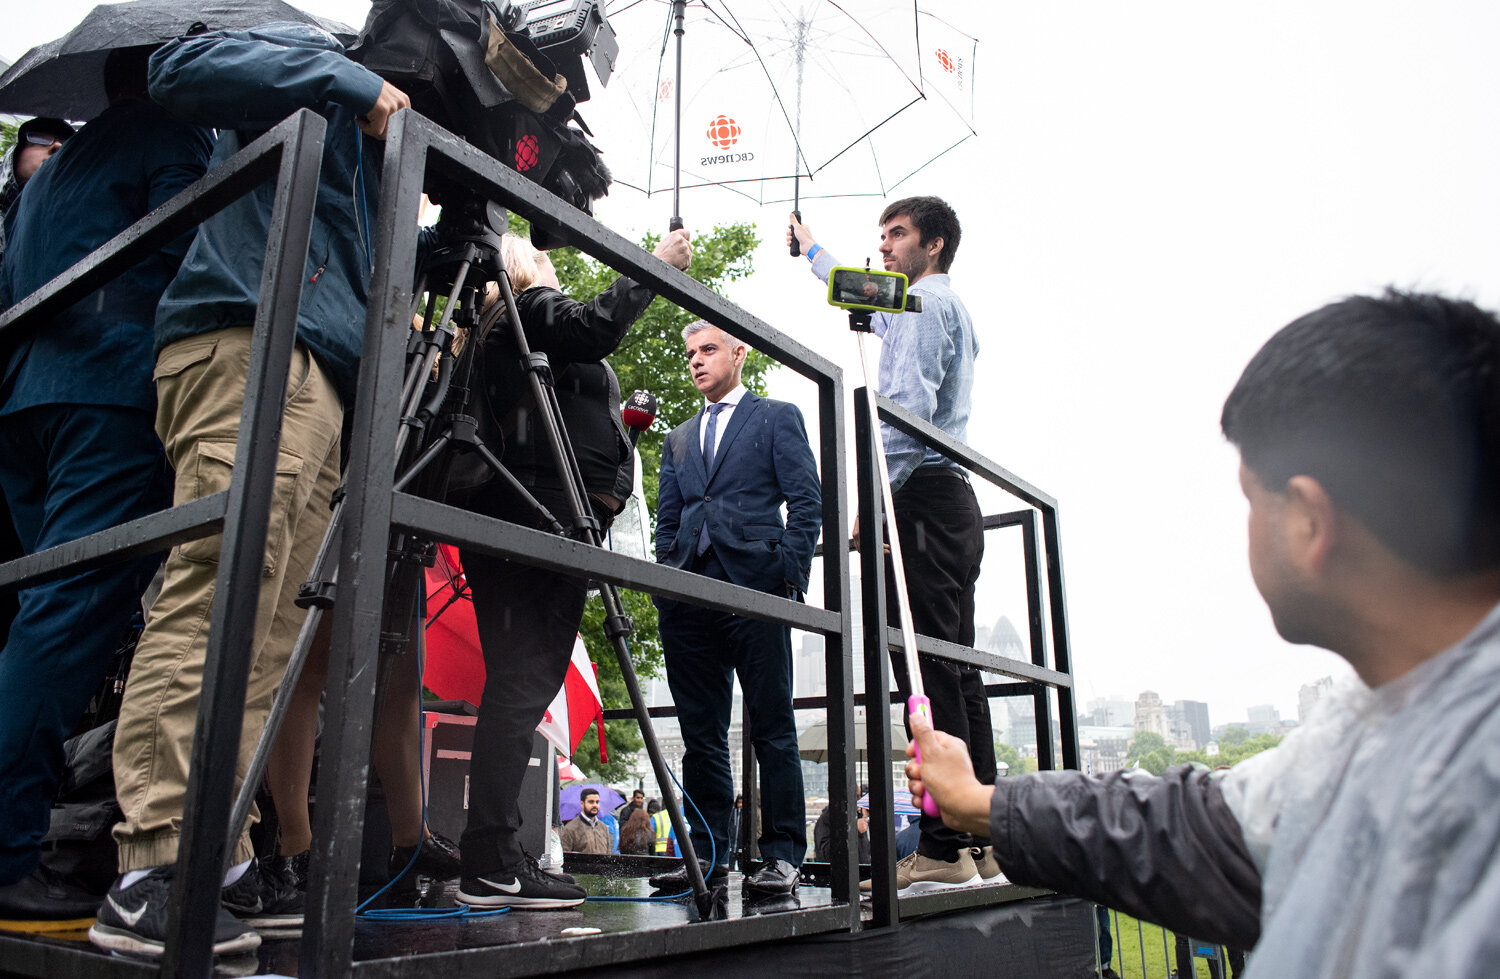  Mayor of London Sadiq Khan being interviewed at a vigil for terrorist attacks London Bridge, London.  Photograph by Eleanor Bentall 